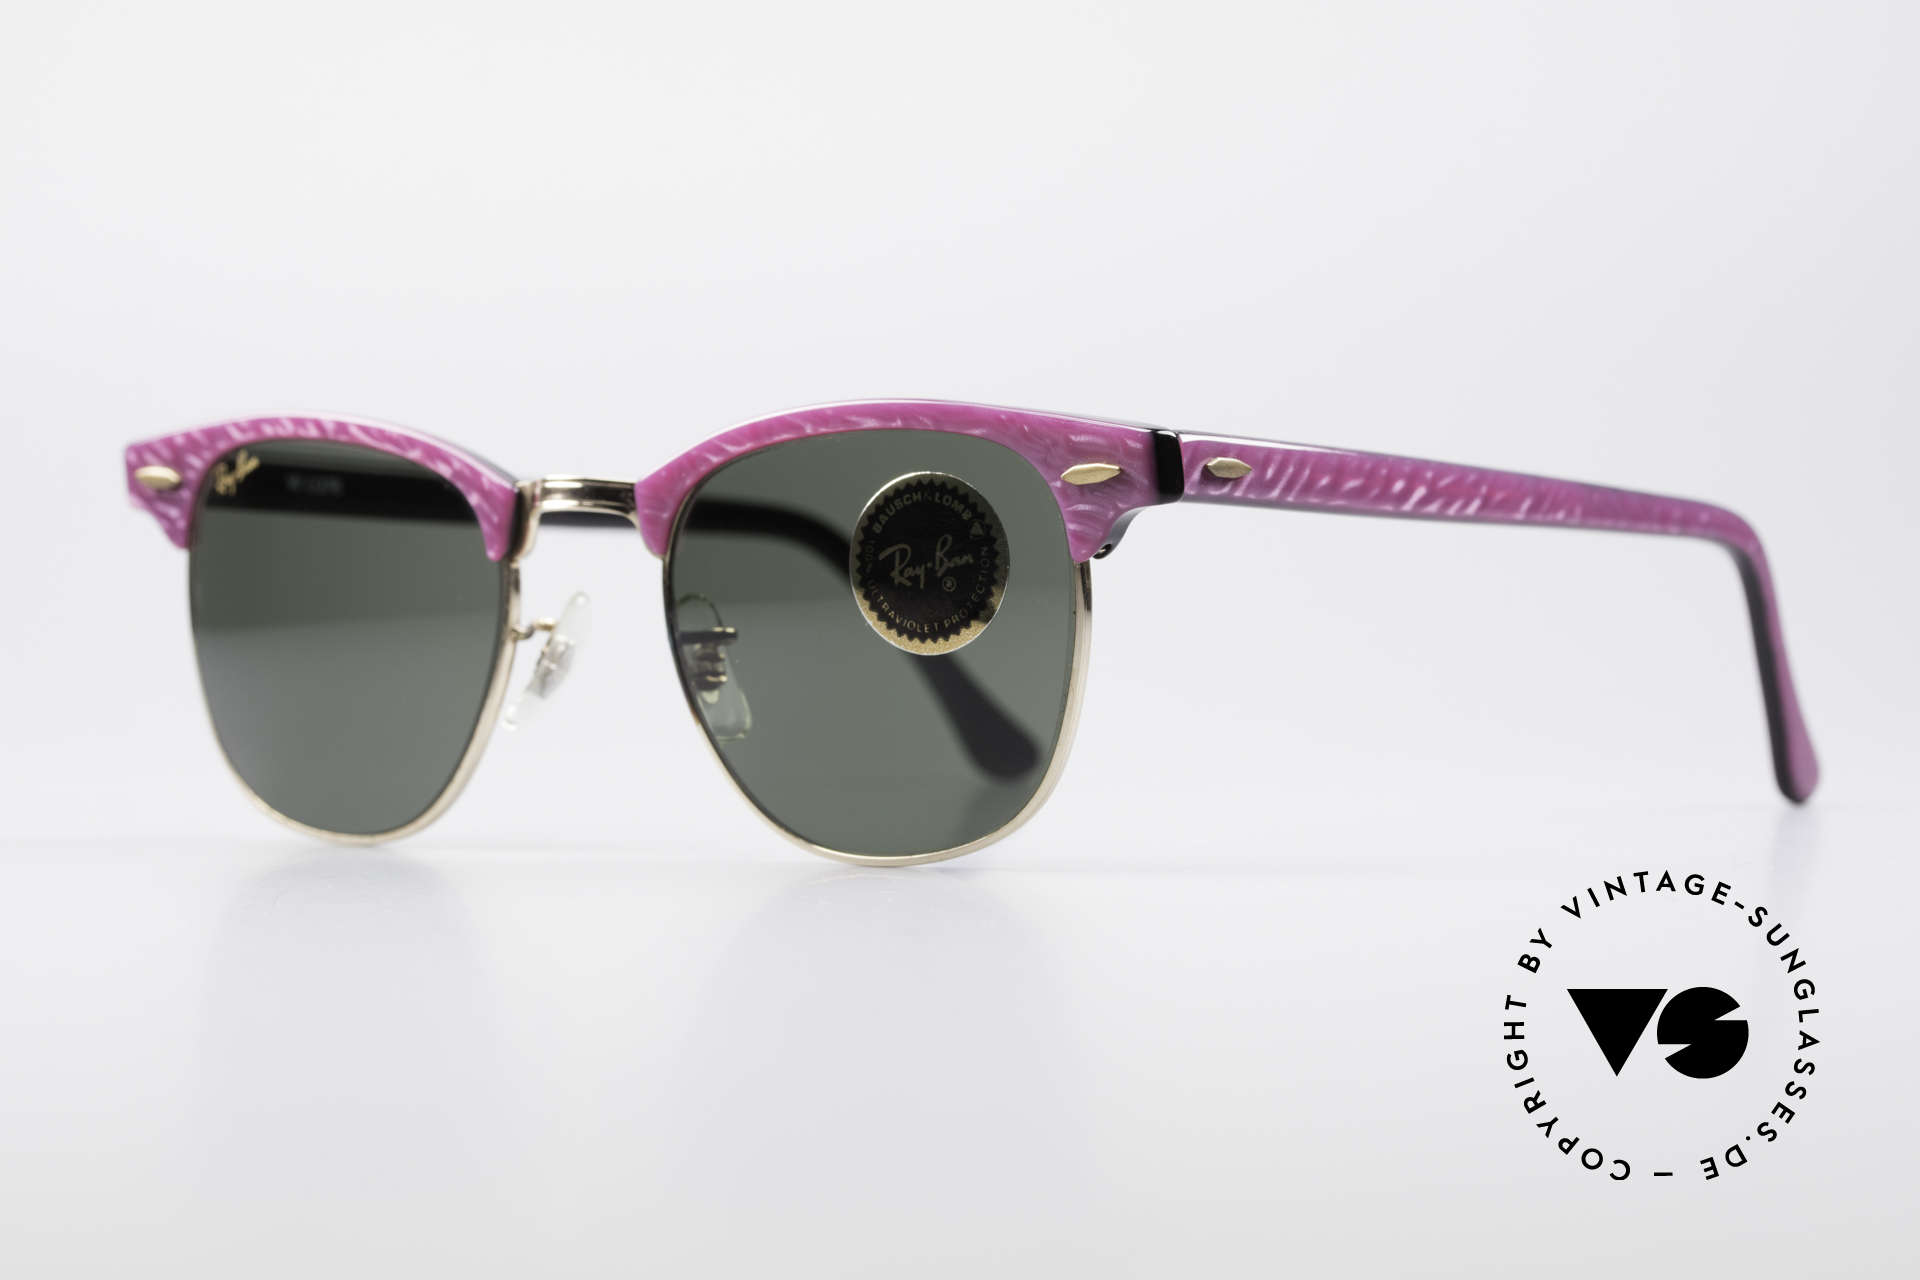 Sunglasses Ray Ban Clubmaster Bausch & Lomb USA Shades